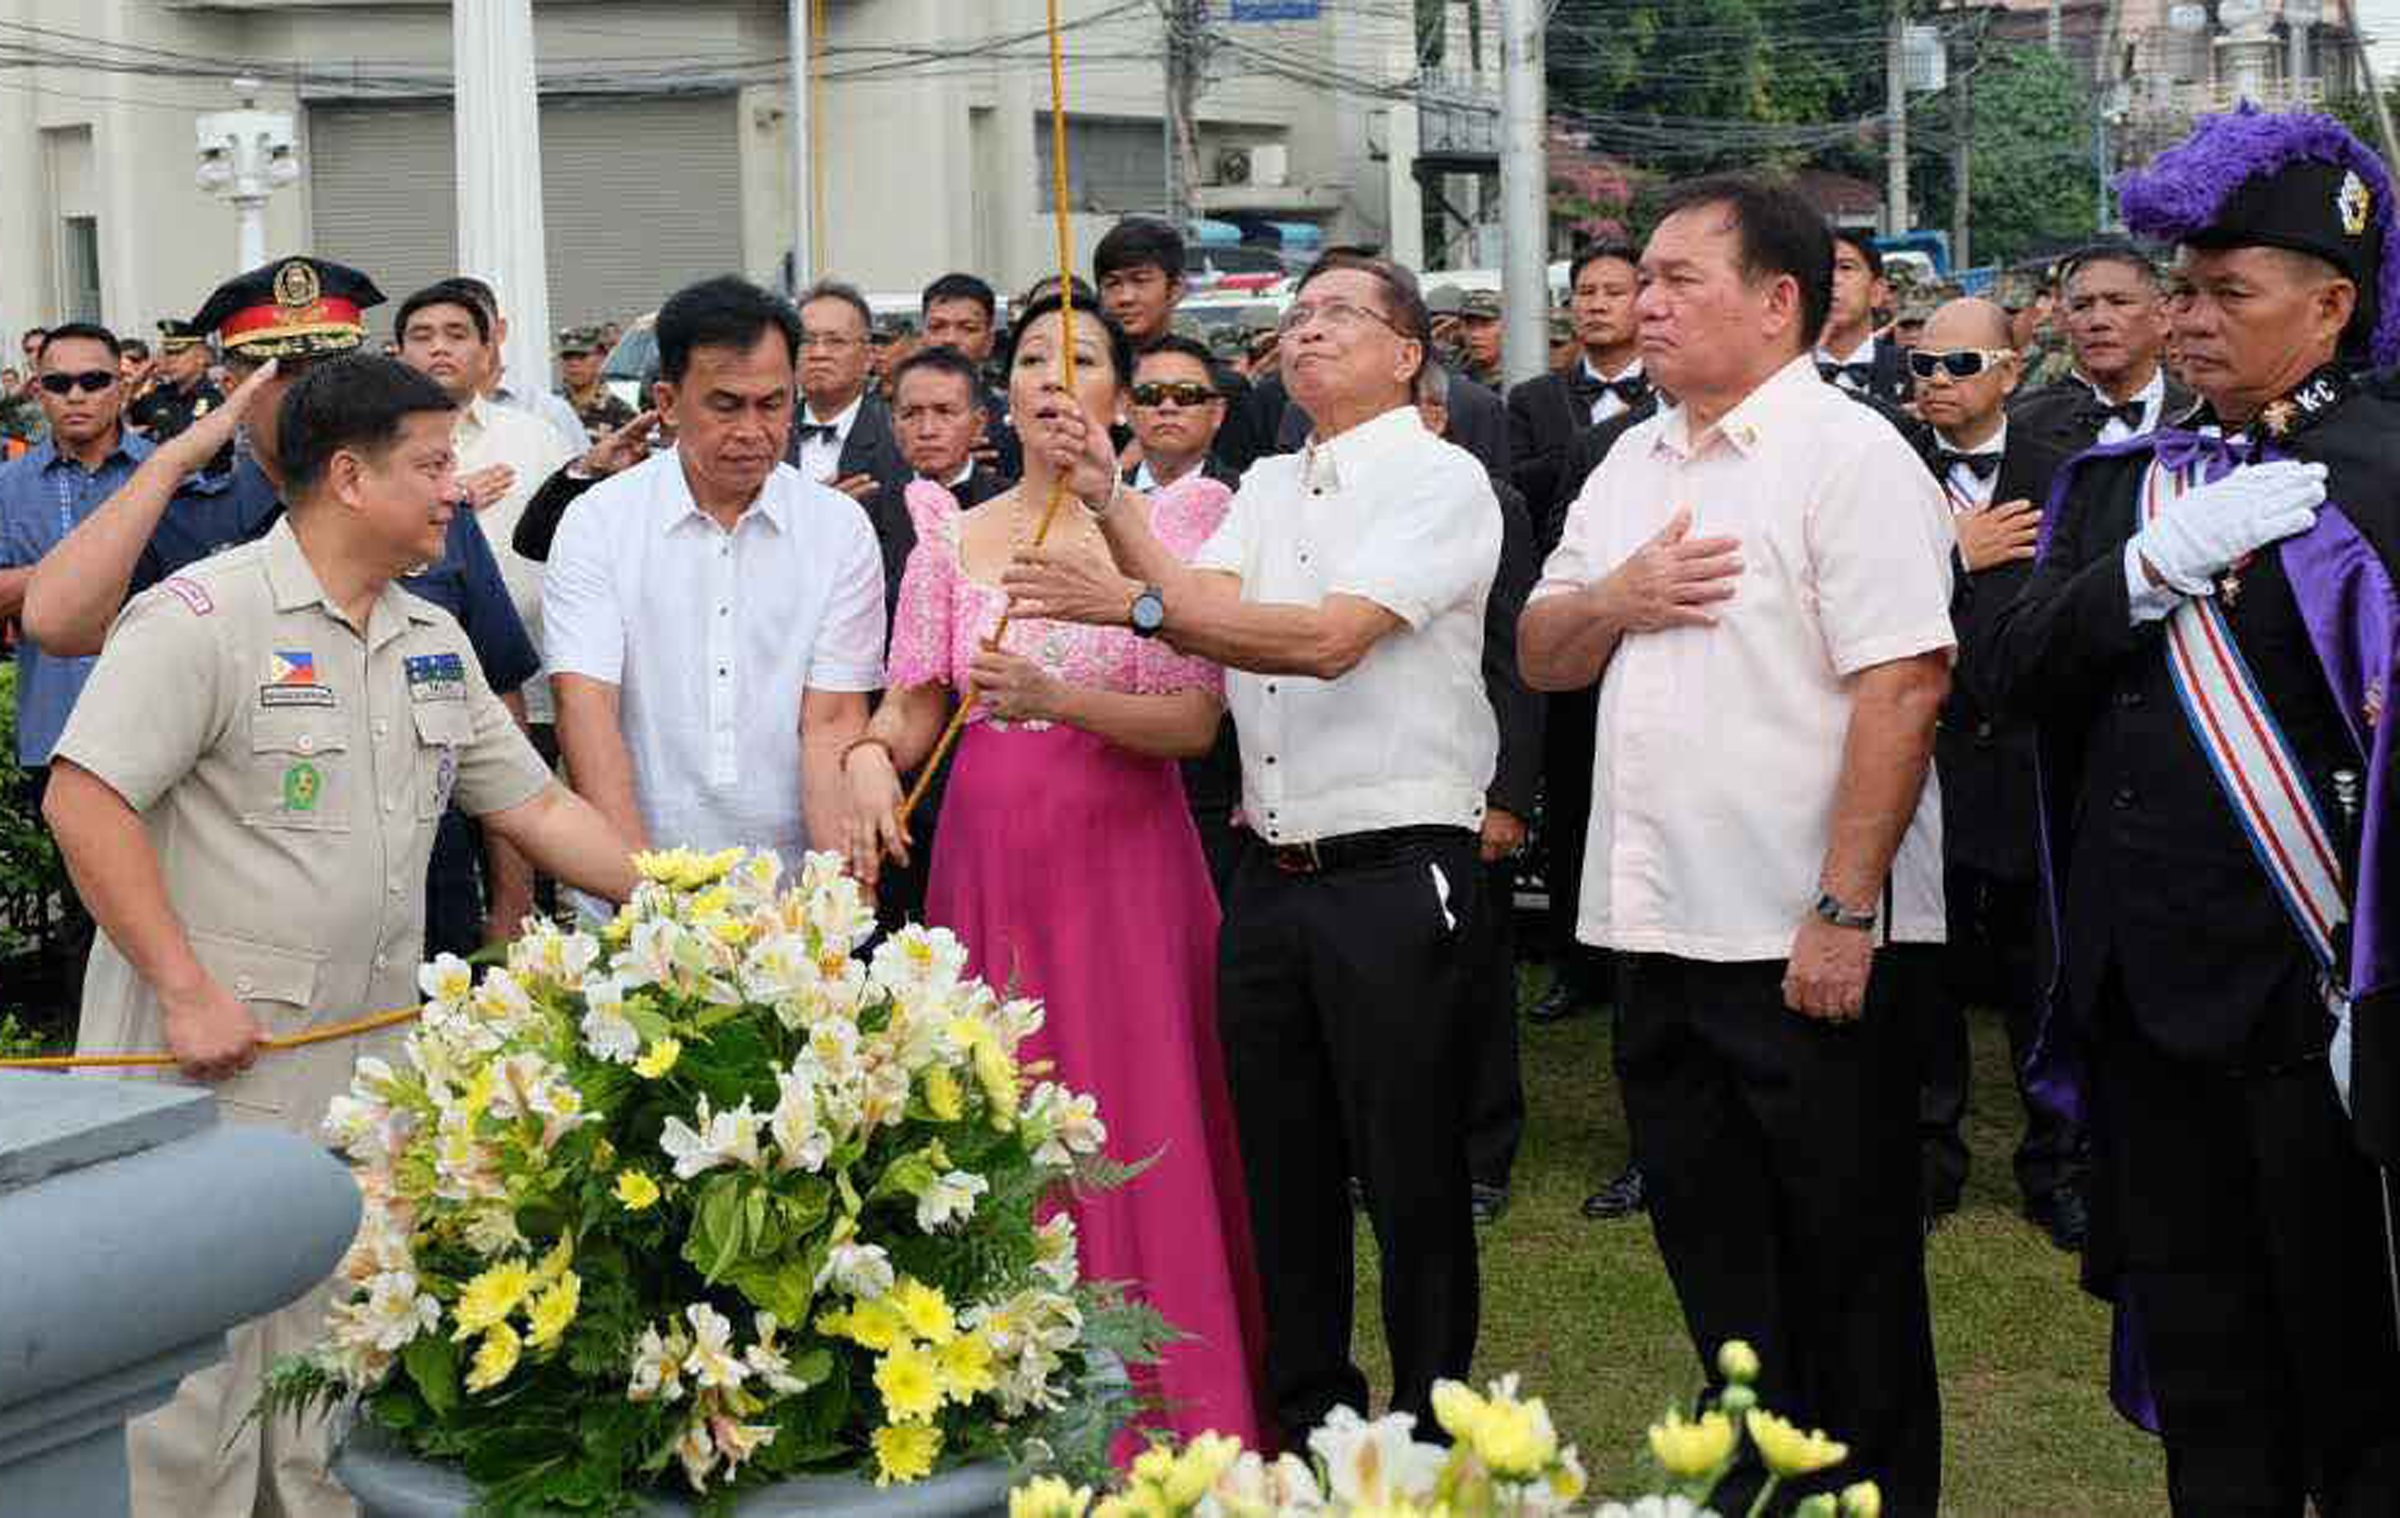 Dureza leads Independence Day rites in Zamboanga City